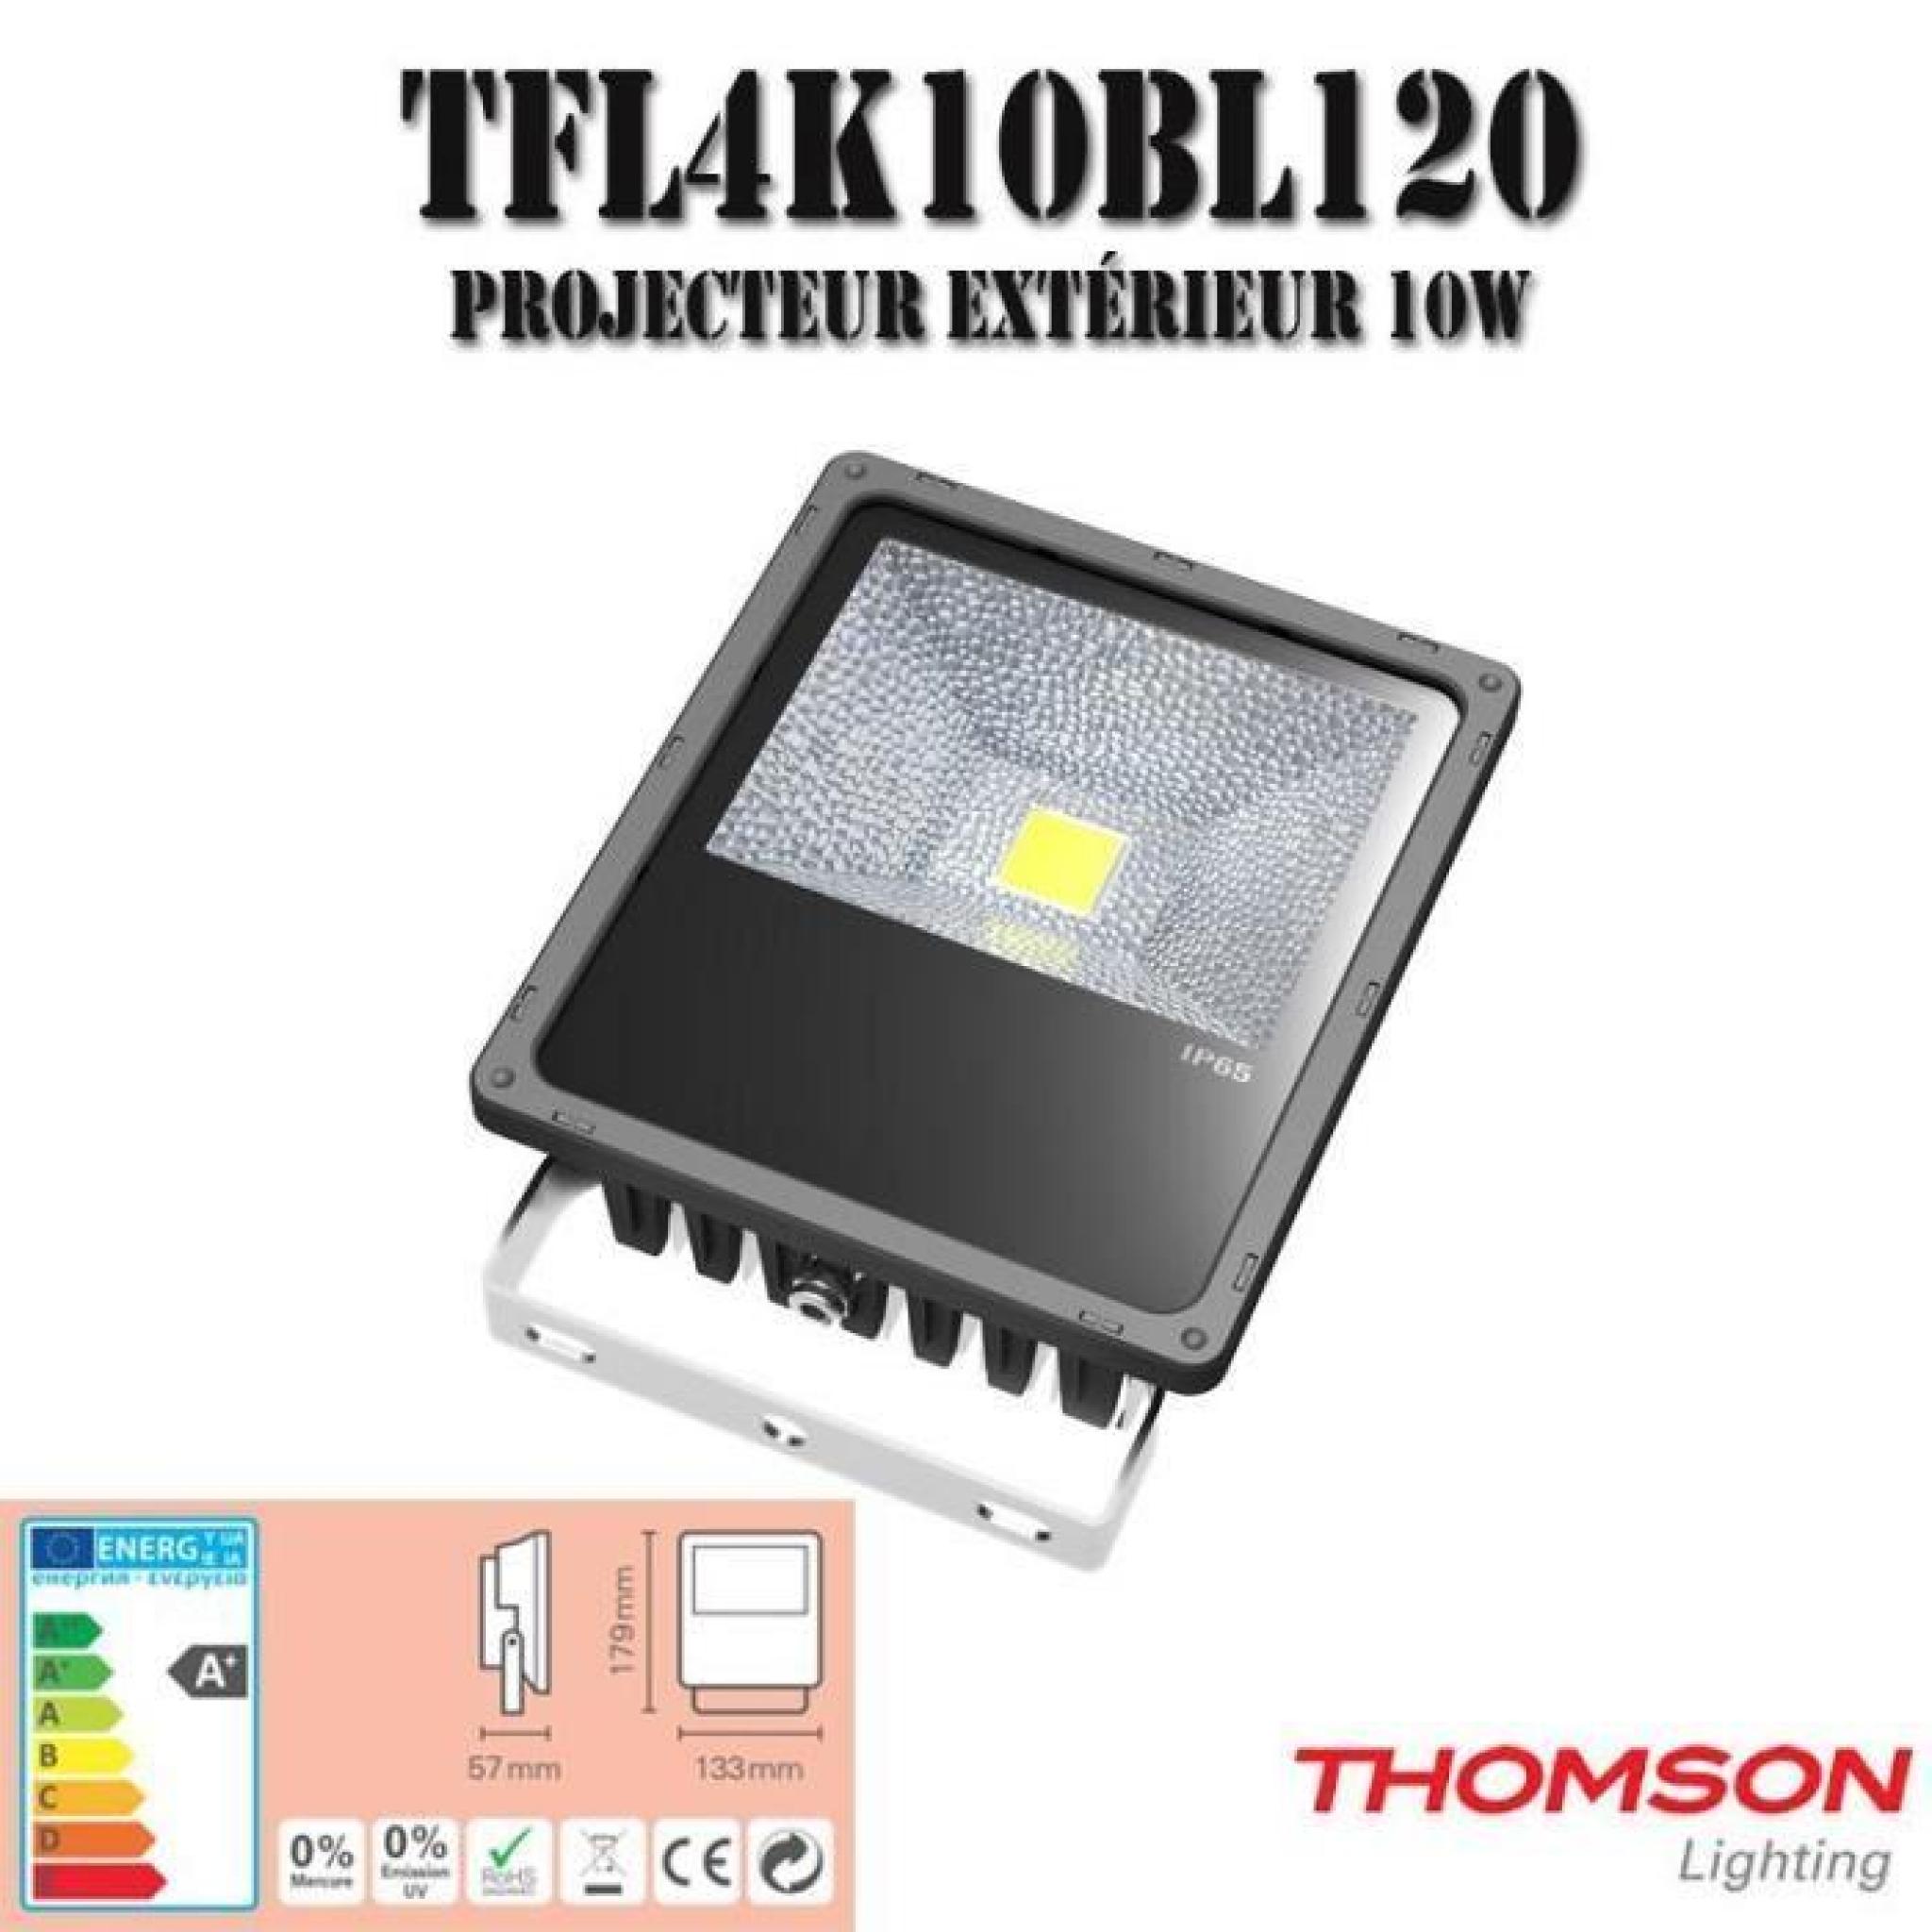 TFL4K10BL120: Projecteur ext 10W 4K